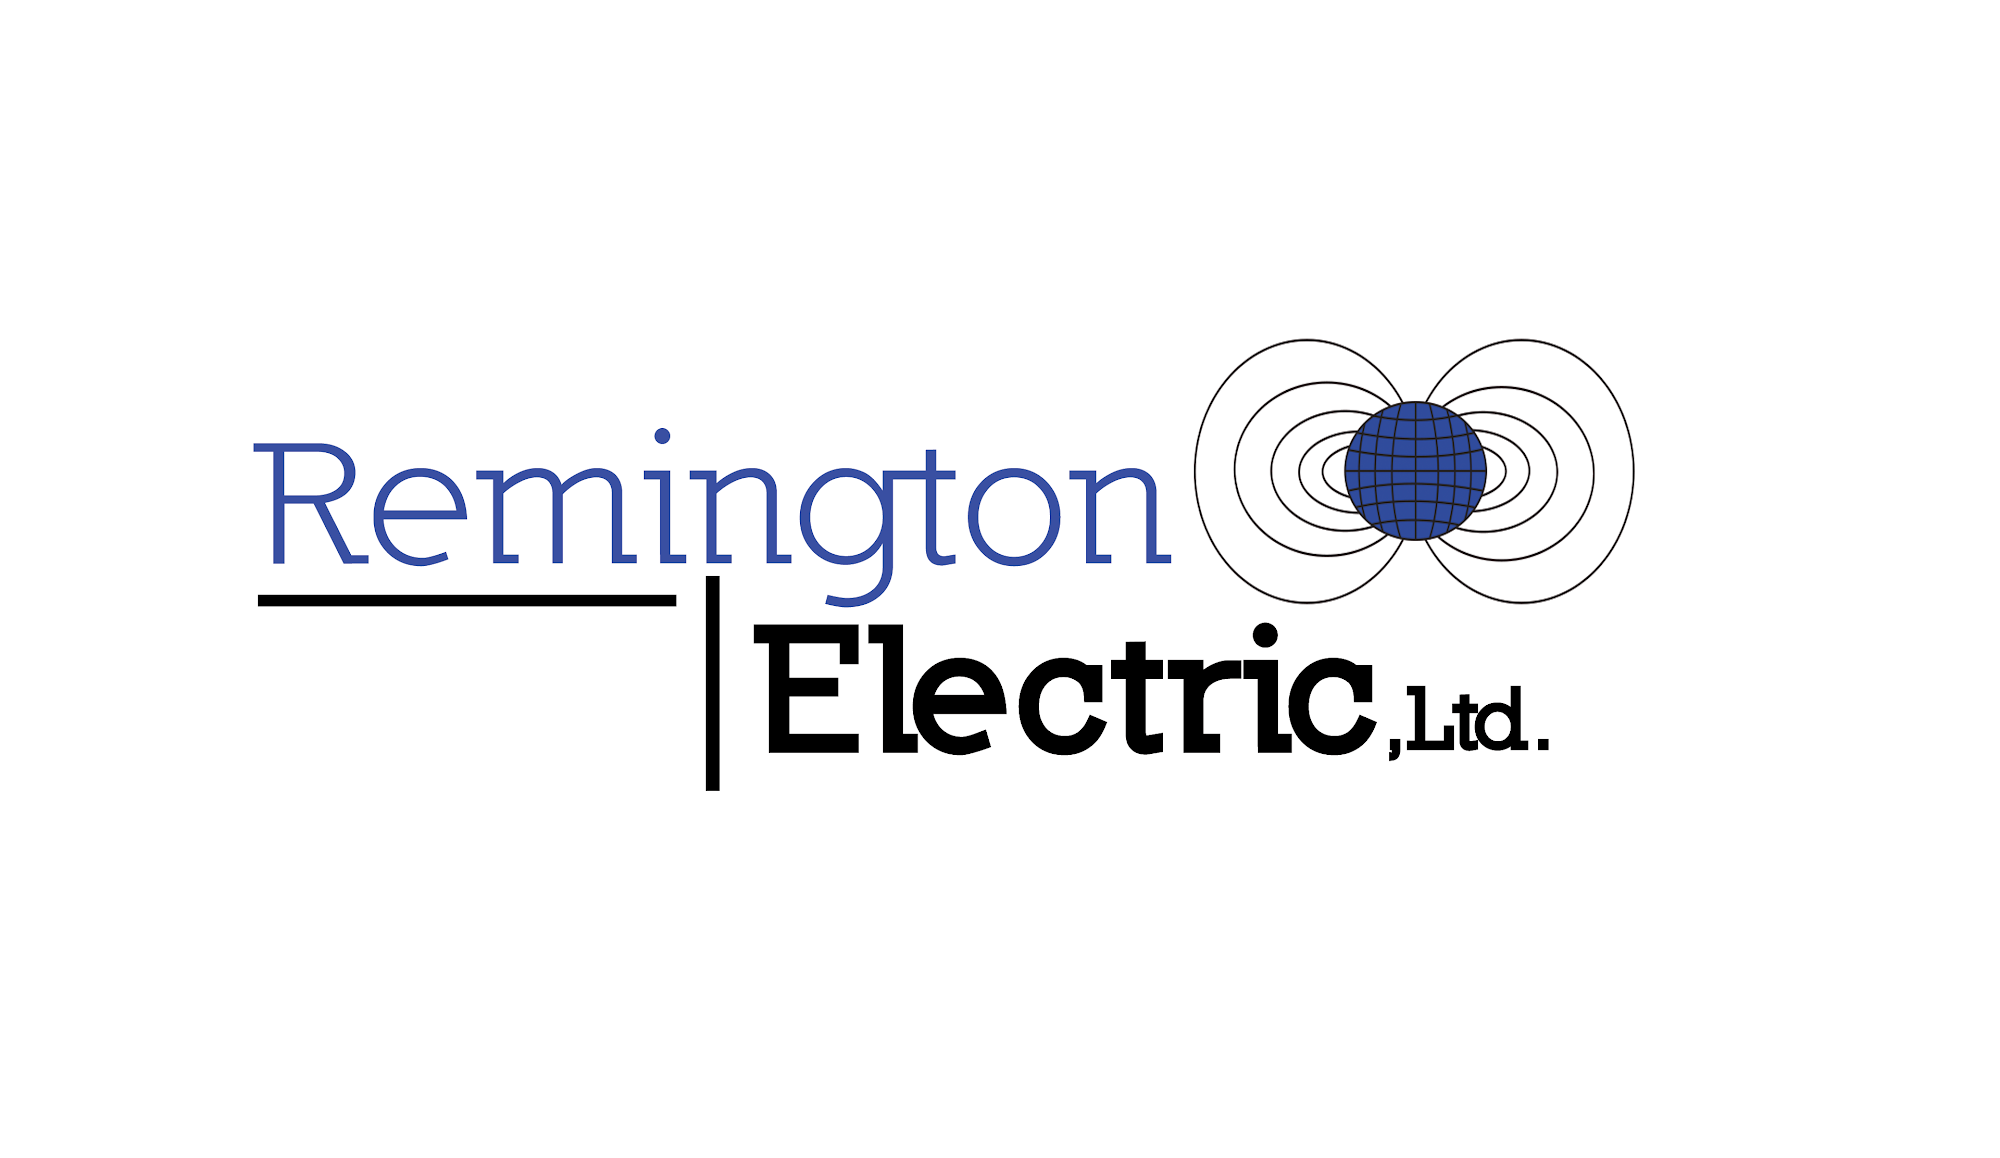 Remington Electric, Ltd. 225 W Temple St, Washington Court House Ohio 43160